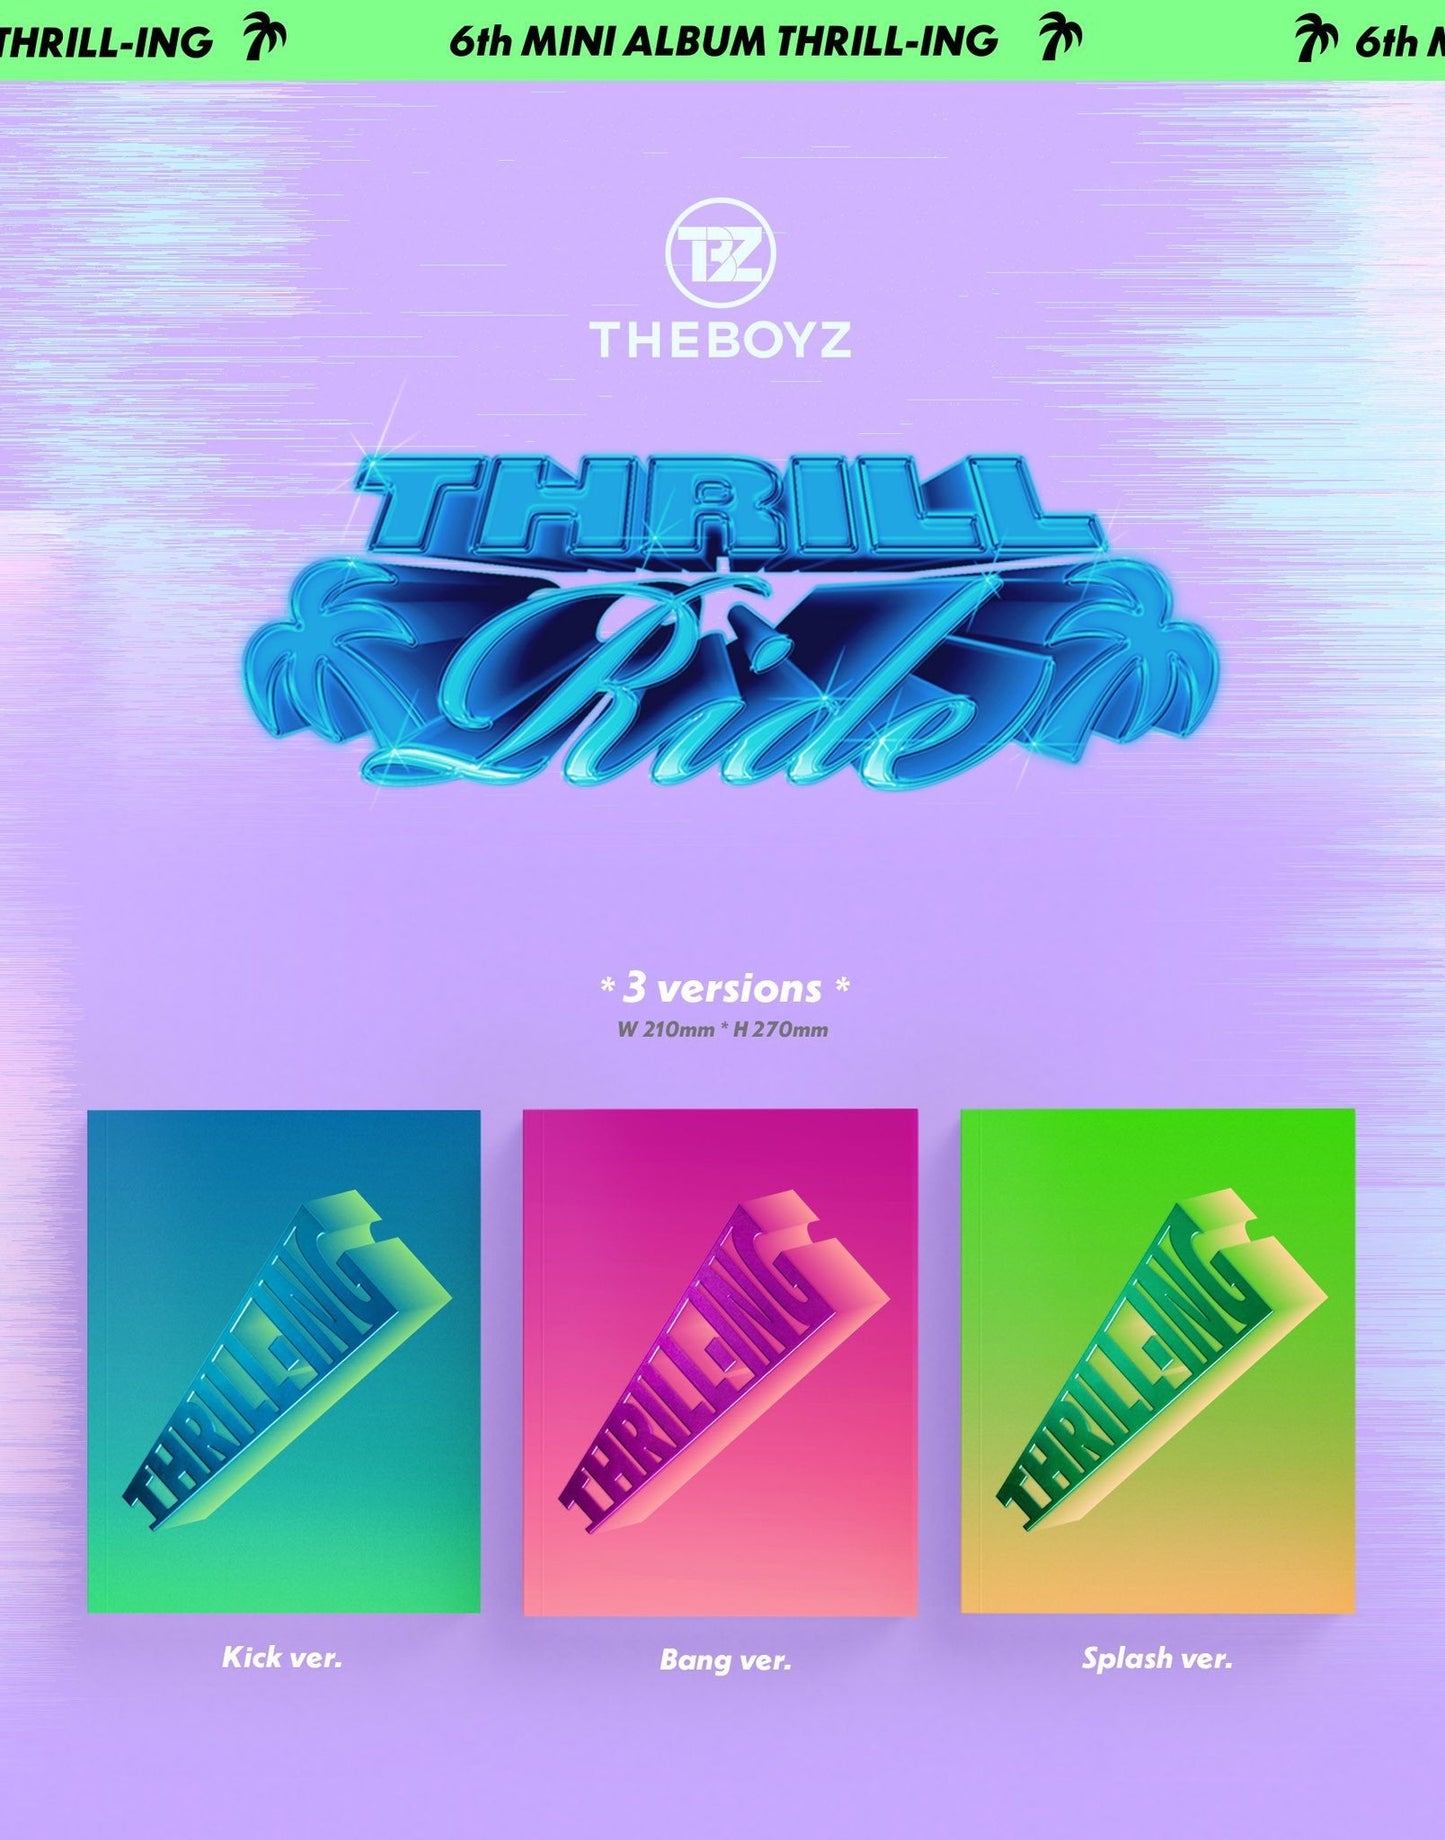 THE BOYZ Thrill-ing 6th Mini Album